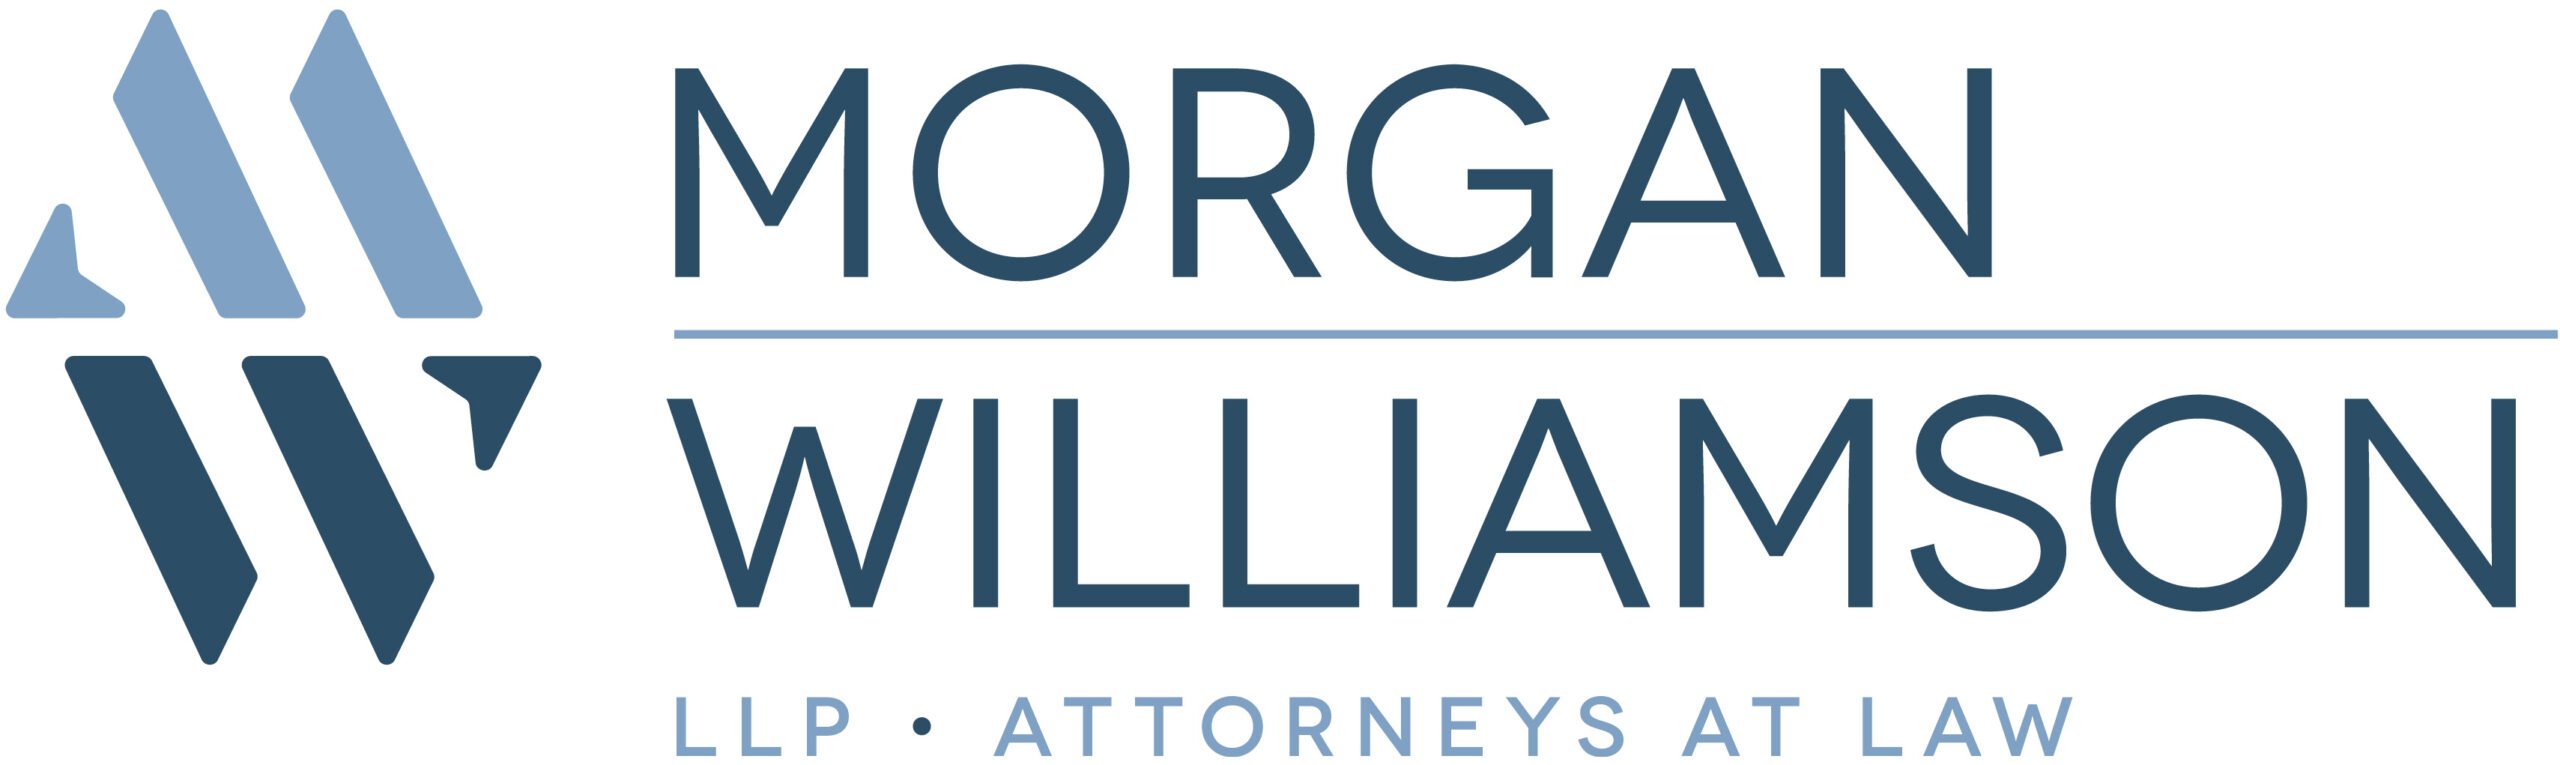 Morgan Williamson LLP - Attorneys at Law